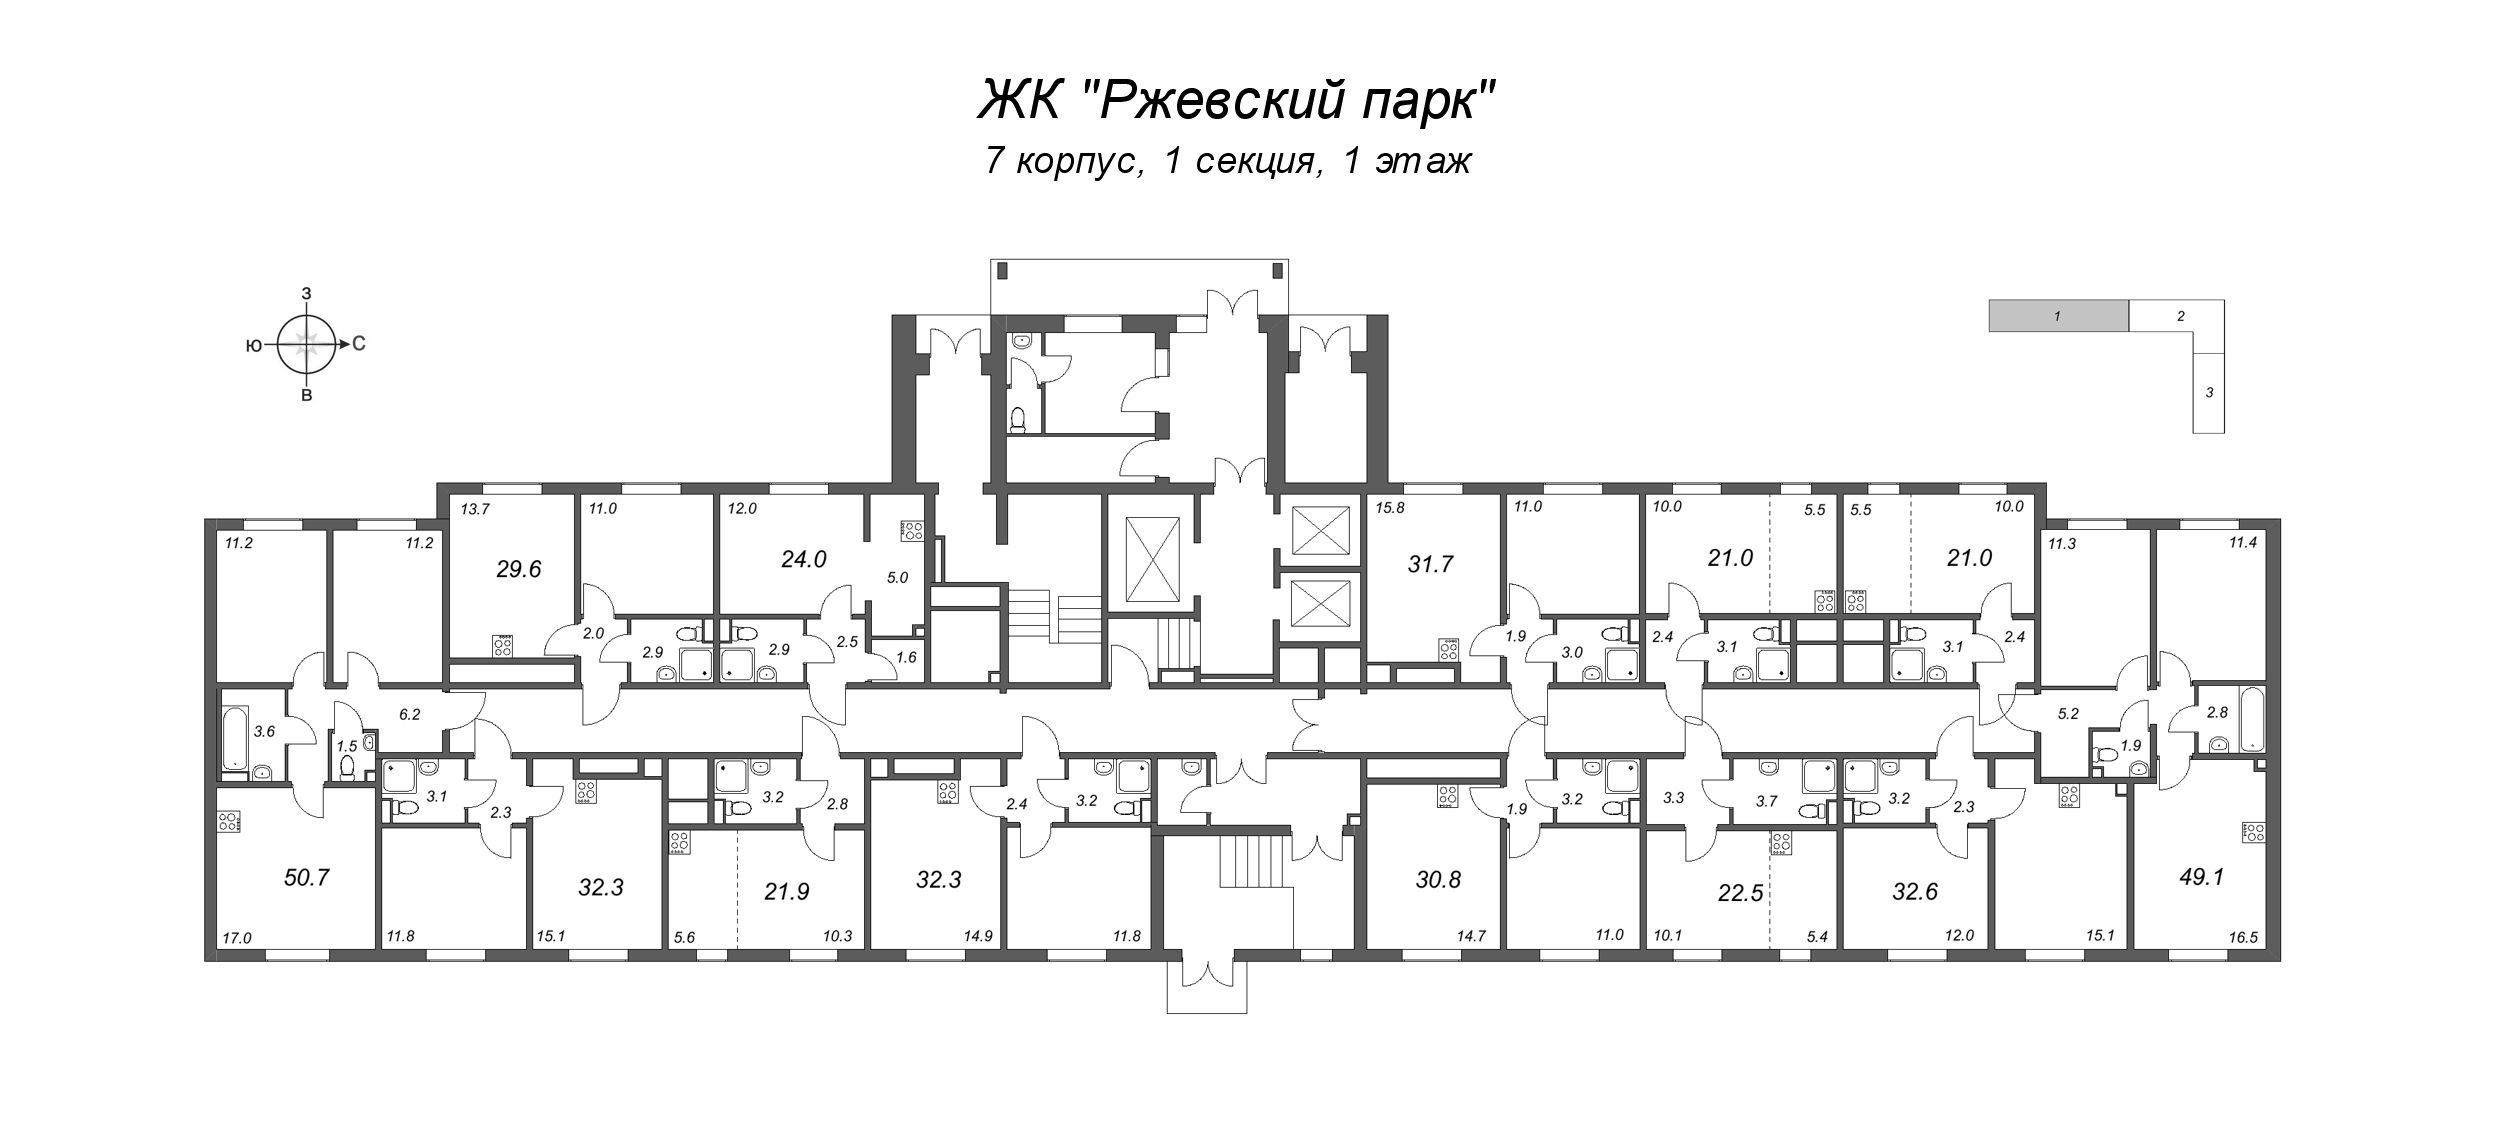 3-комнатная (Евро) квартира, 50.7 м² - планировка этажа